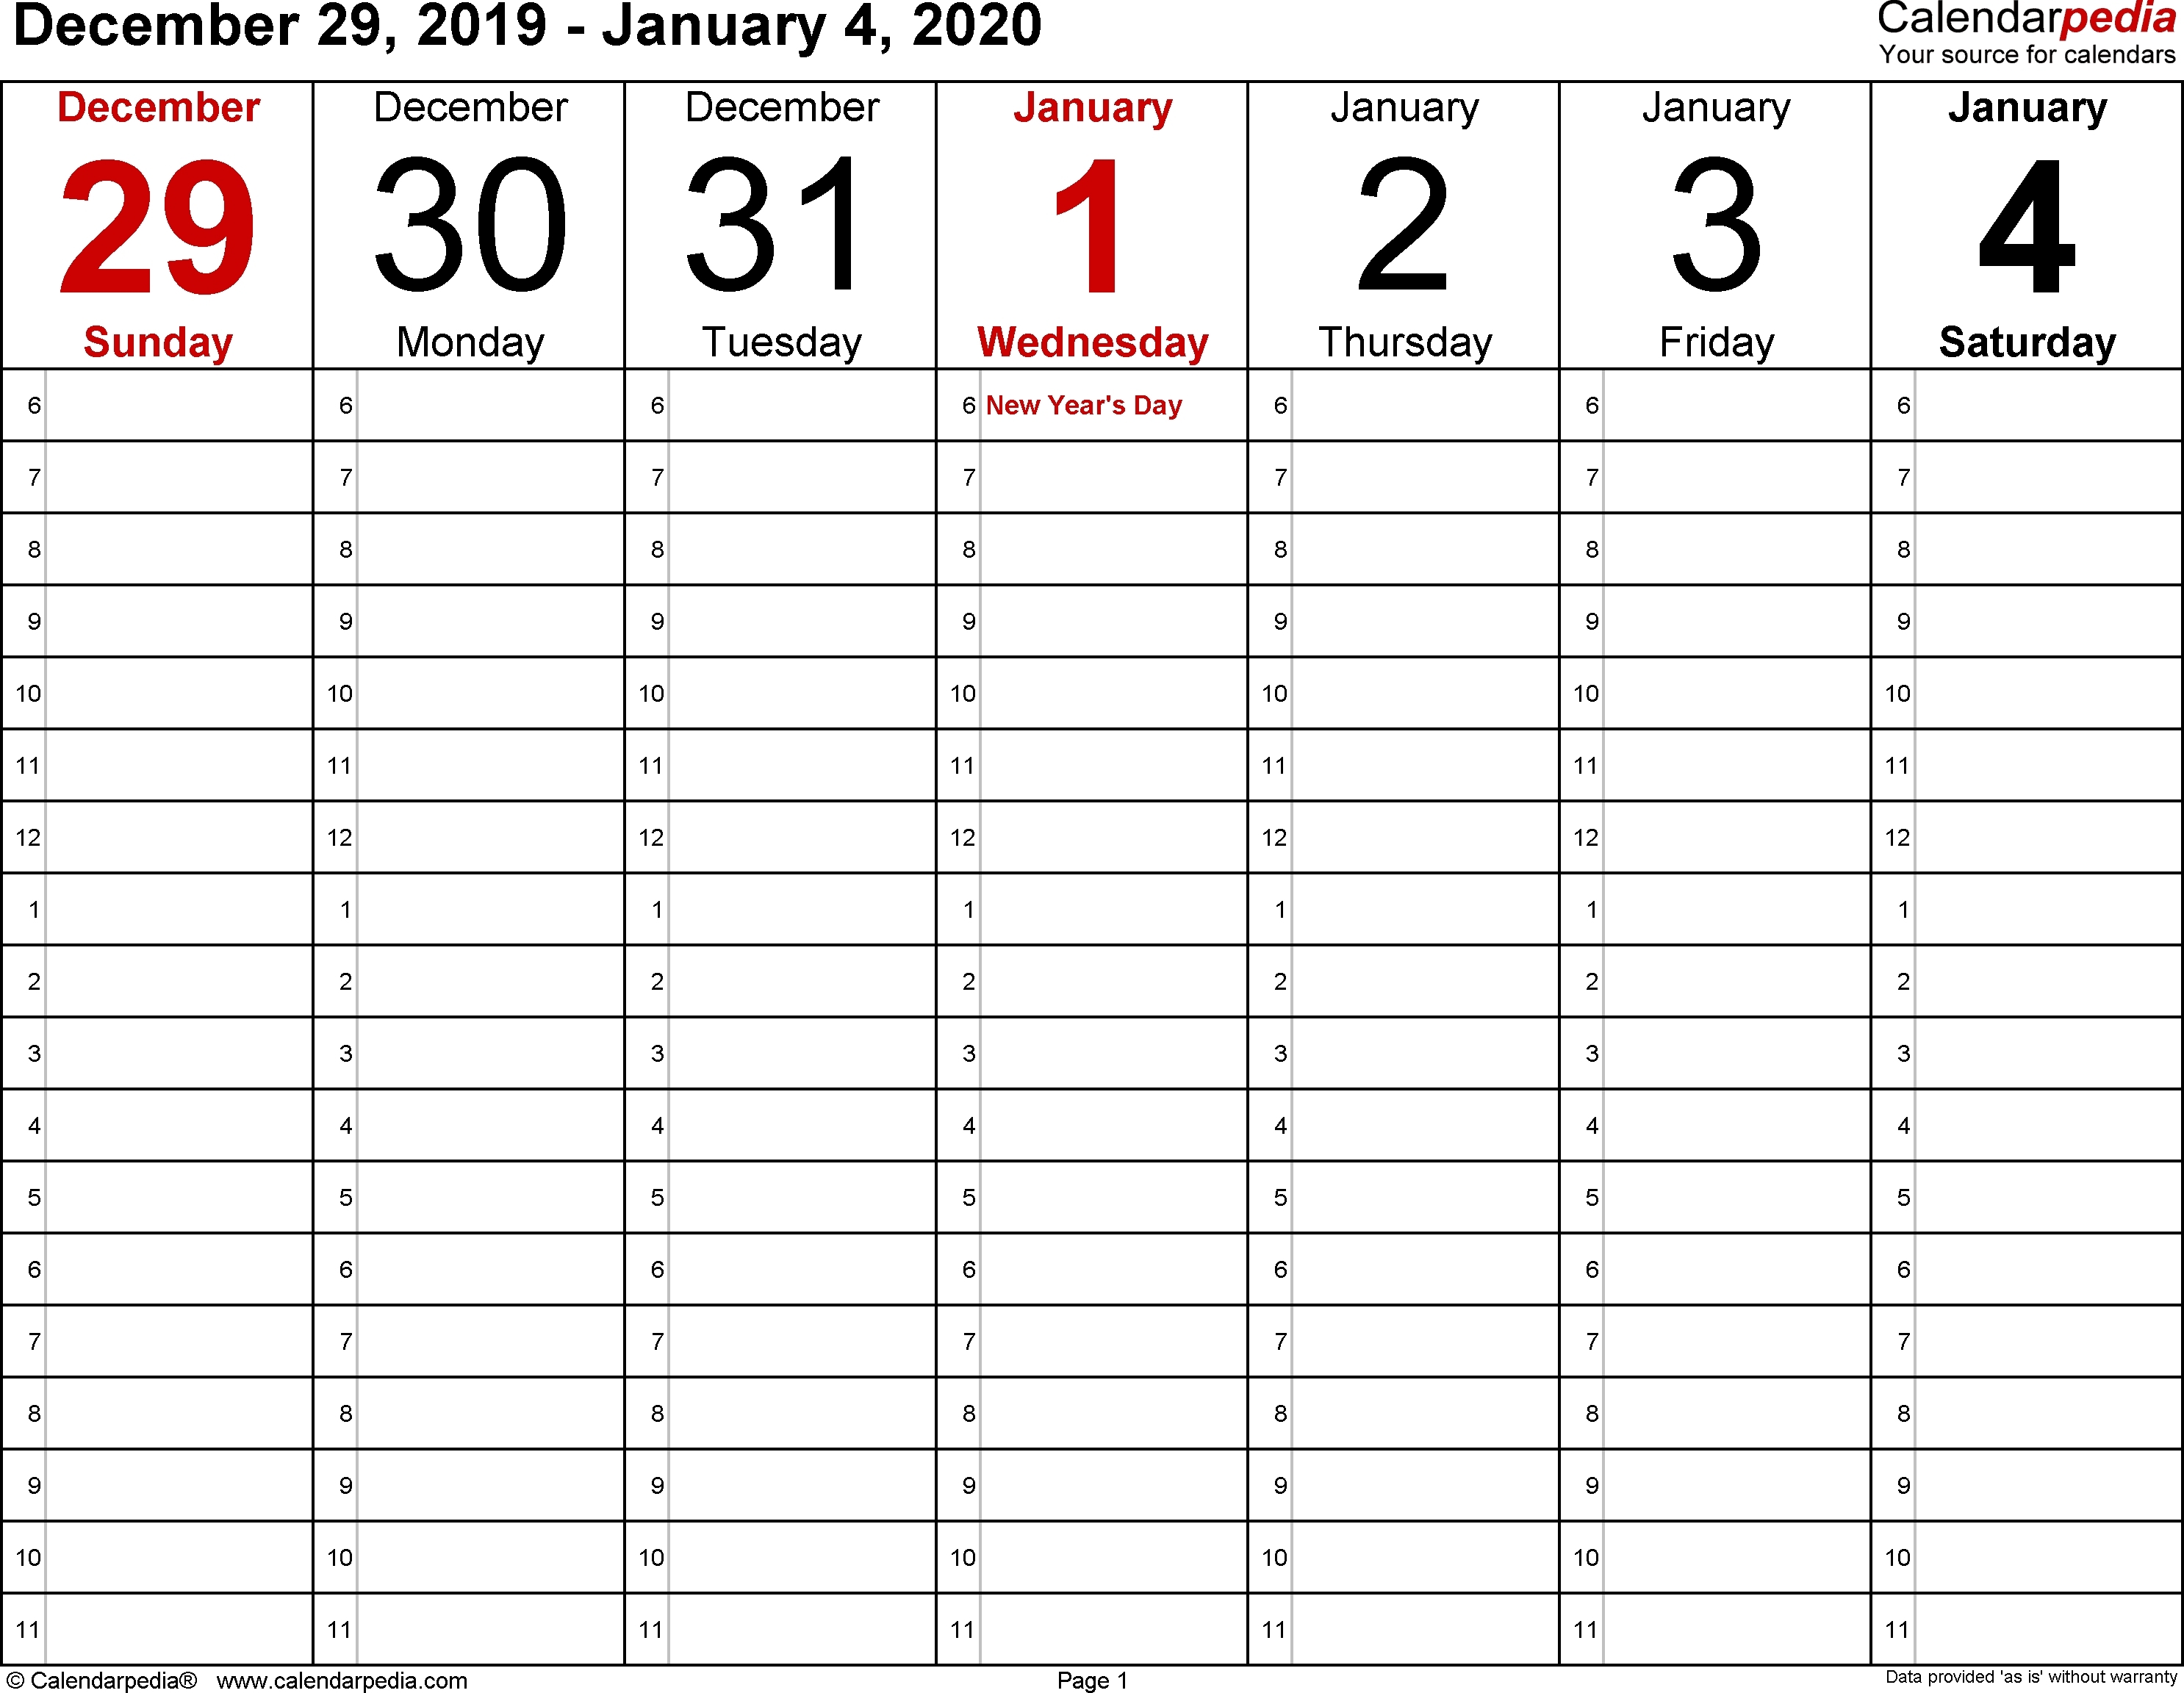 Excel Calendar Week 53 | Igotlockedout